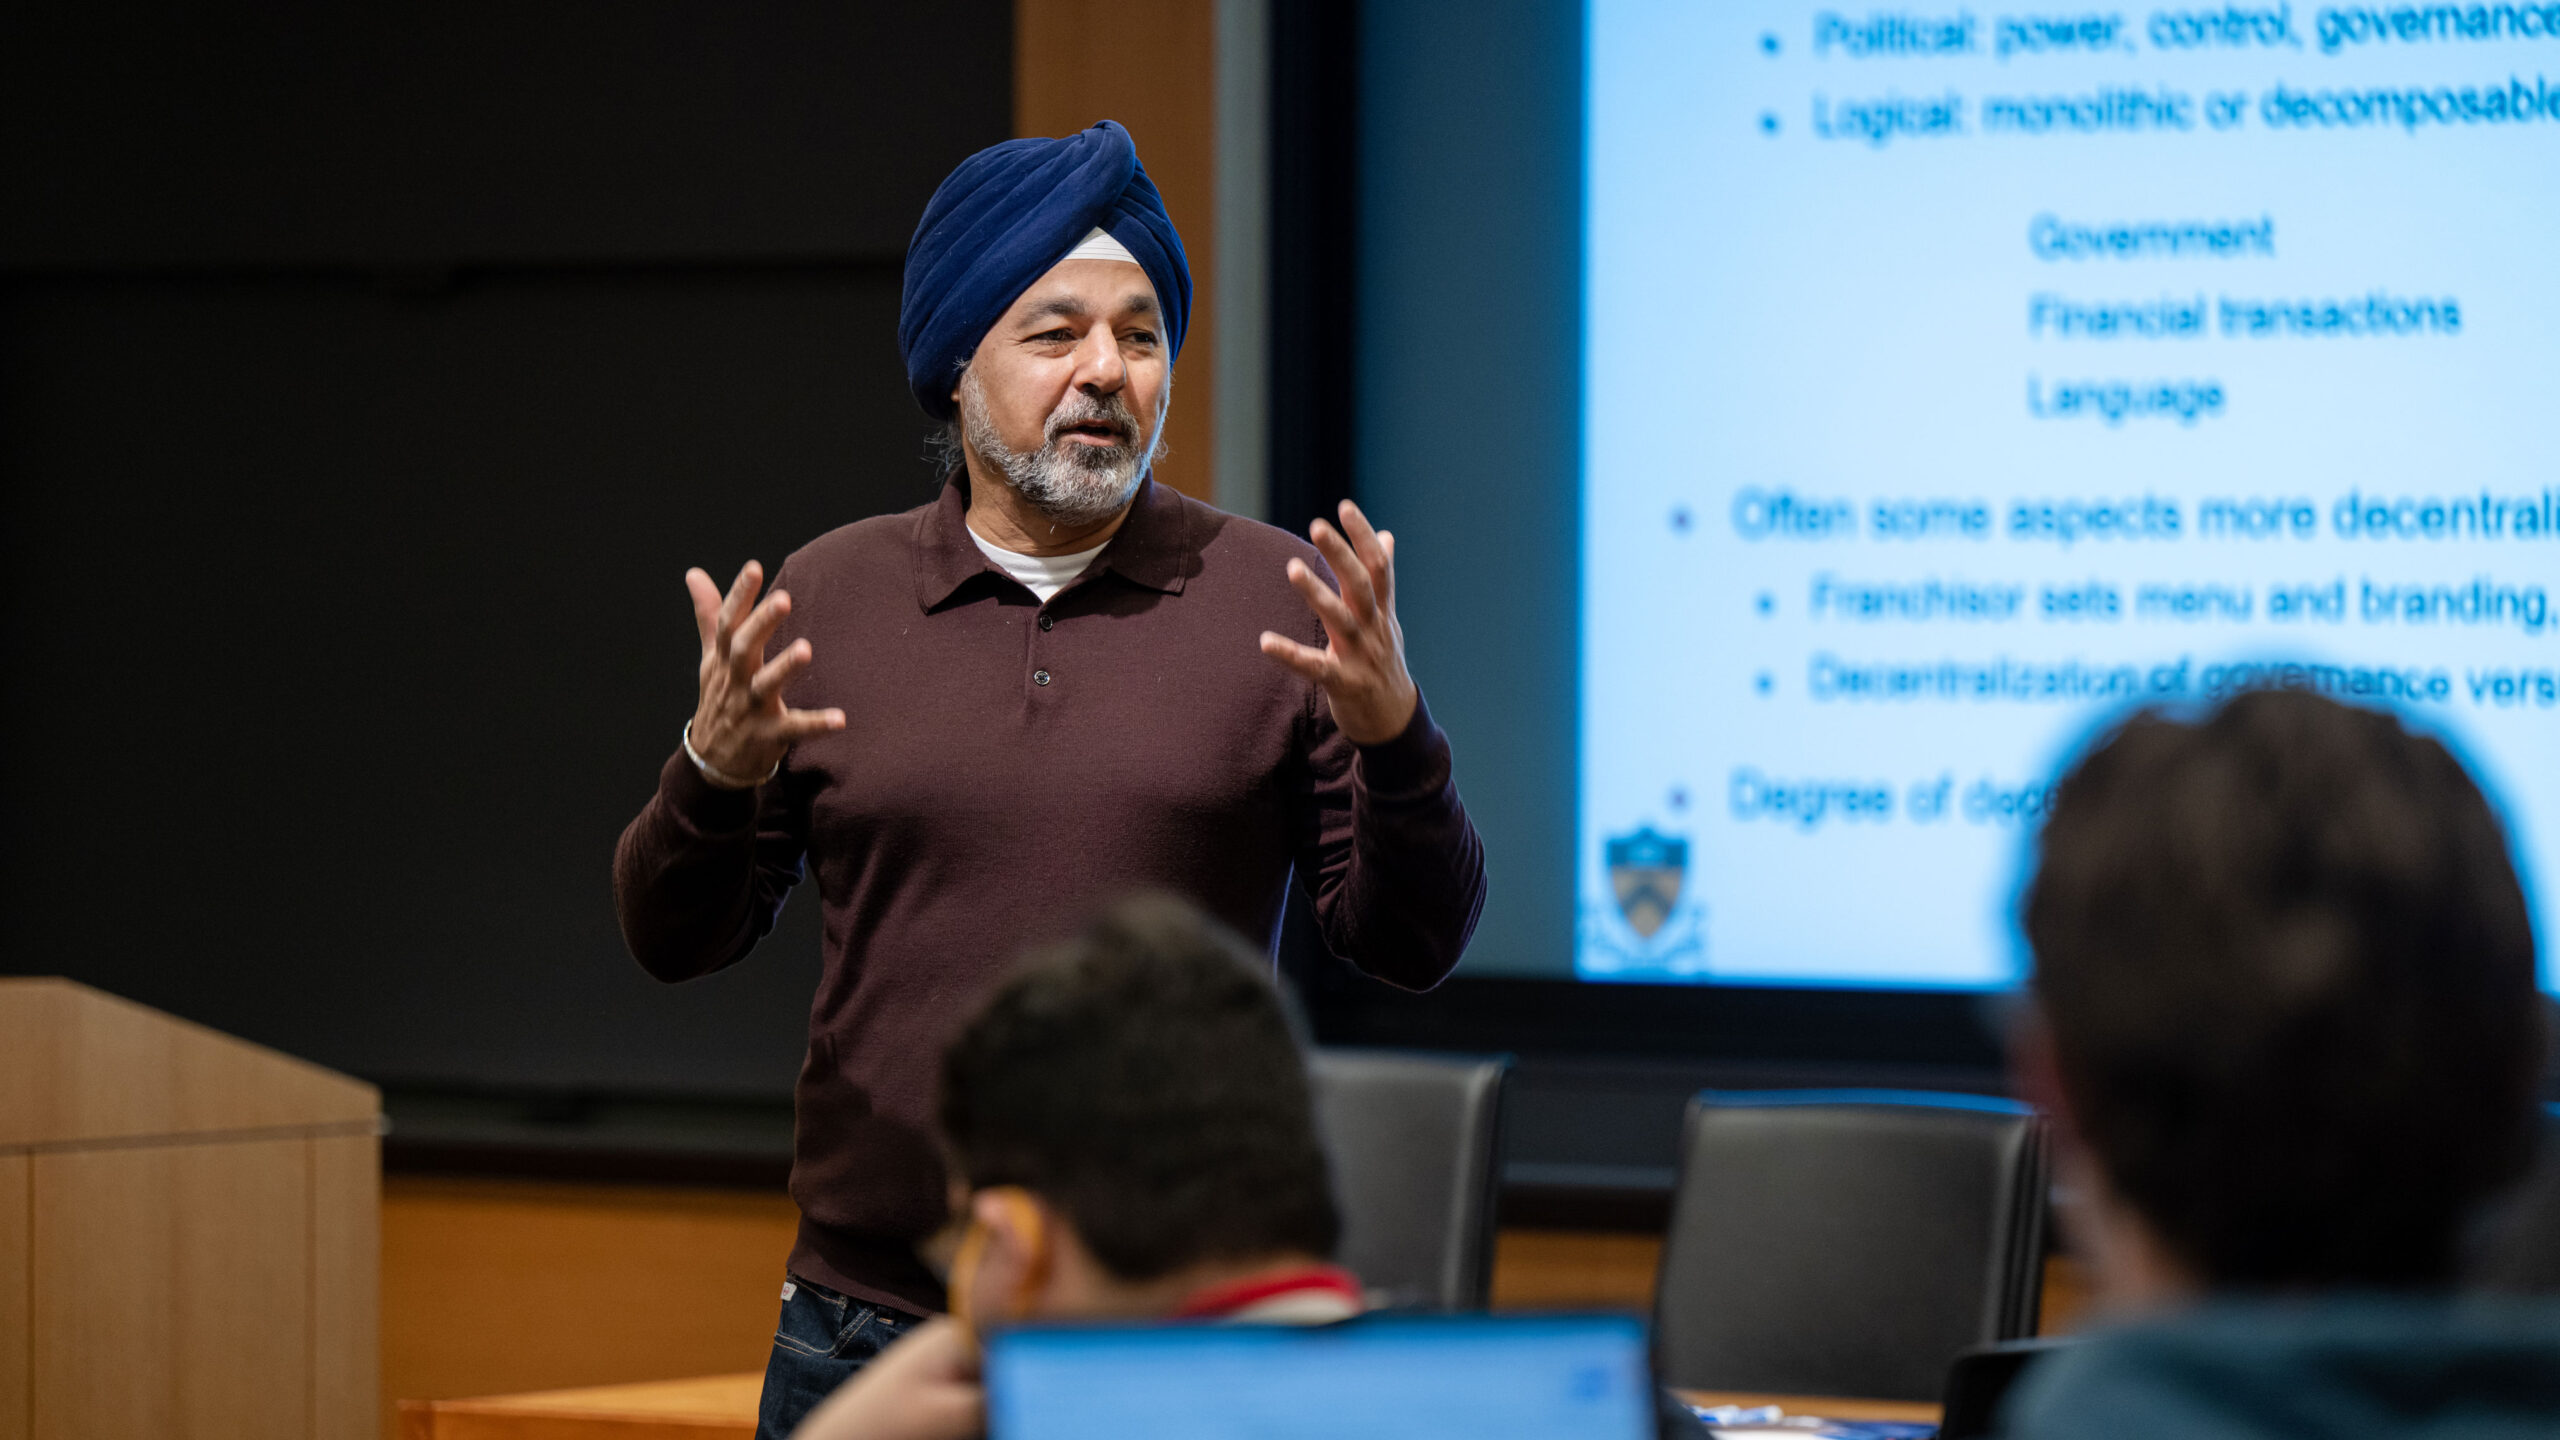 JP Singh teaching a class in front of screen